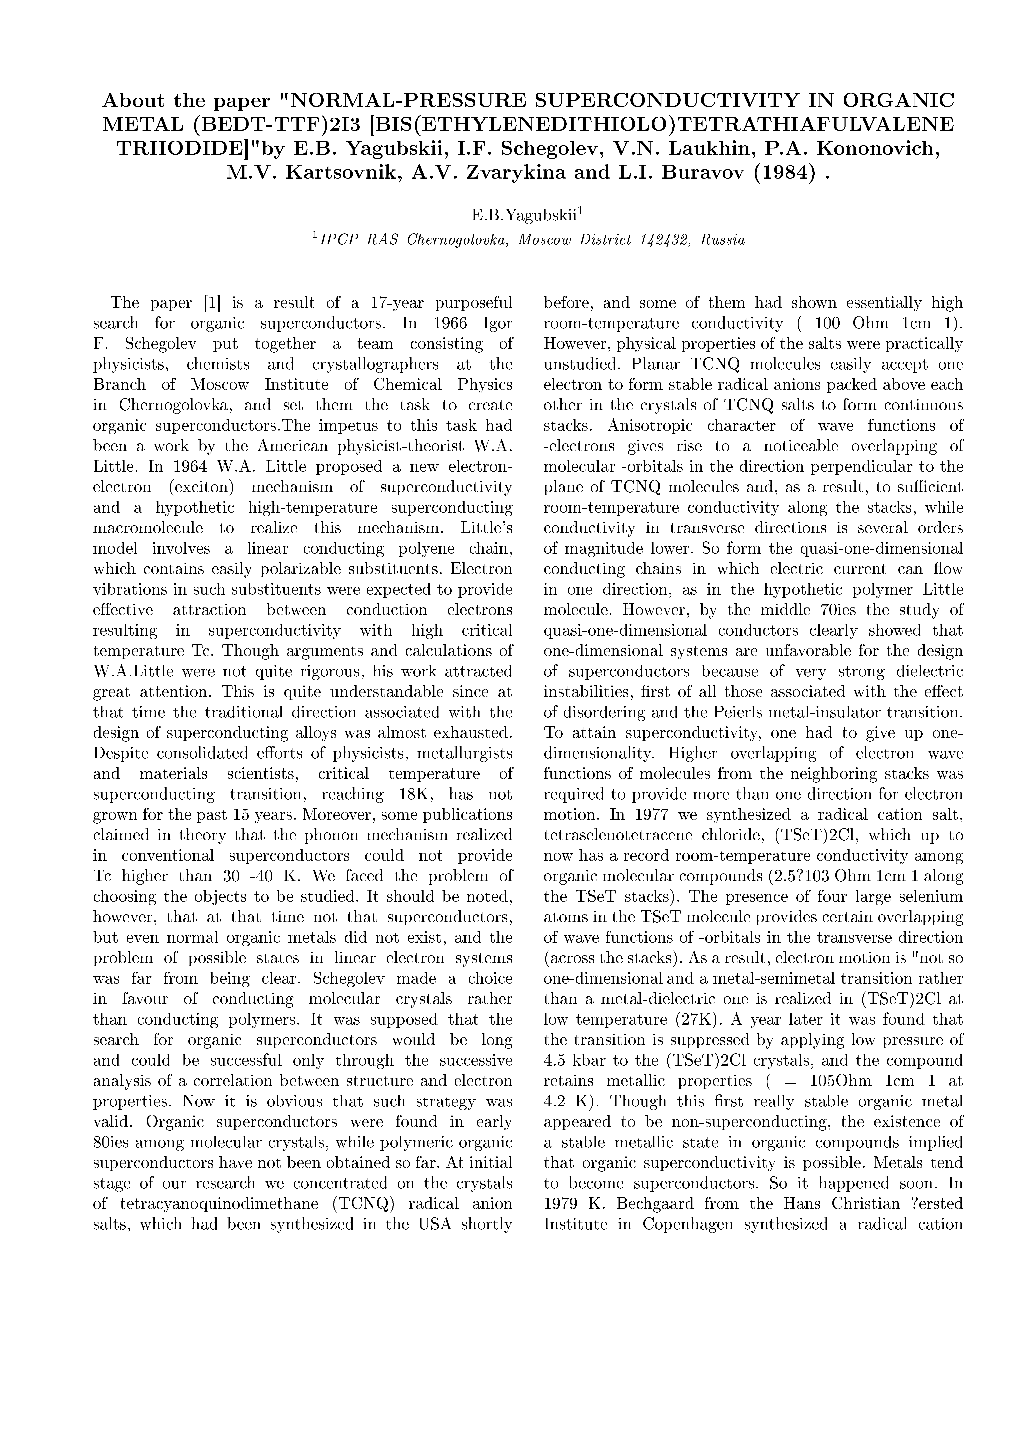 NORMAL-PRESSURE SUPERCONDUCTIVITY in ORGANIC METAL (BEDT-TTF)2I3 [BIS(ETHYLENEDITHIOLO)TETRATHIAFULVALENE TRIIODIDE]"By E.B